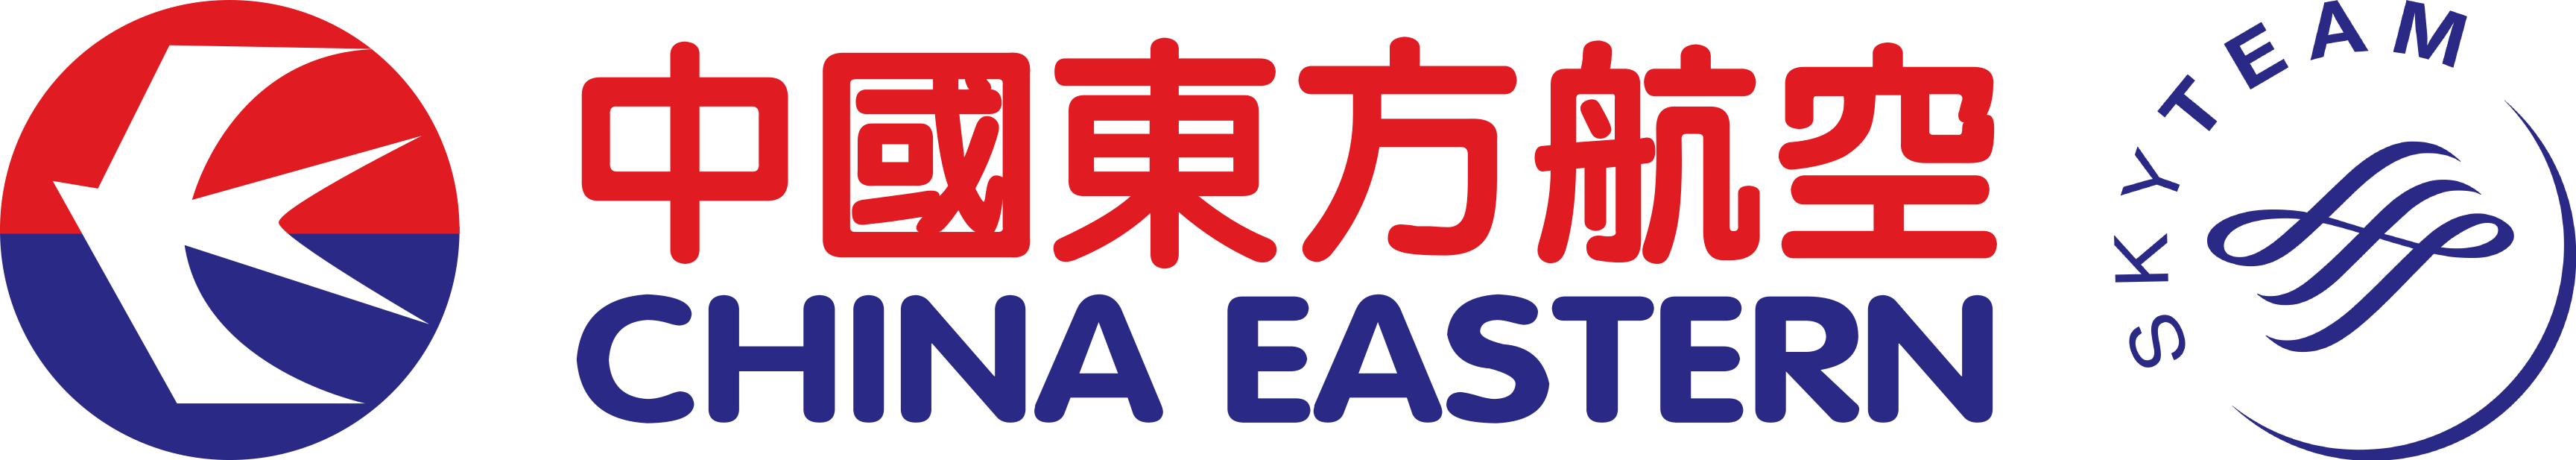 Eastern Logo - China Eastern Airlines | Logopedia | FANDOM powered by Wikia